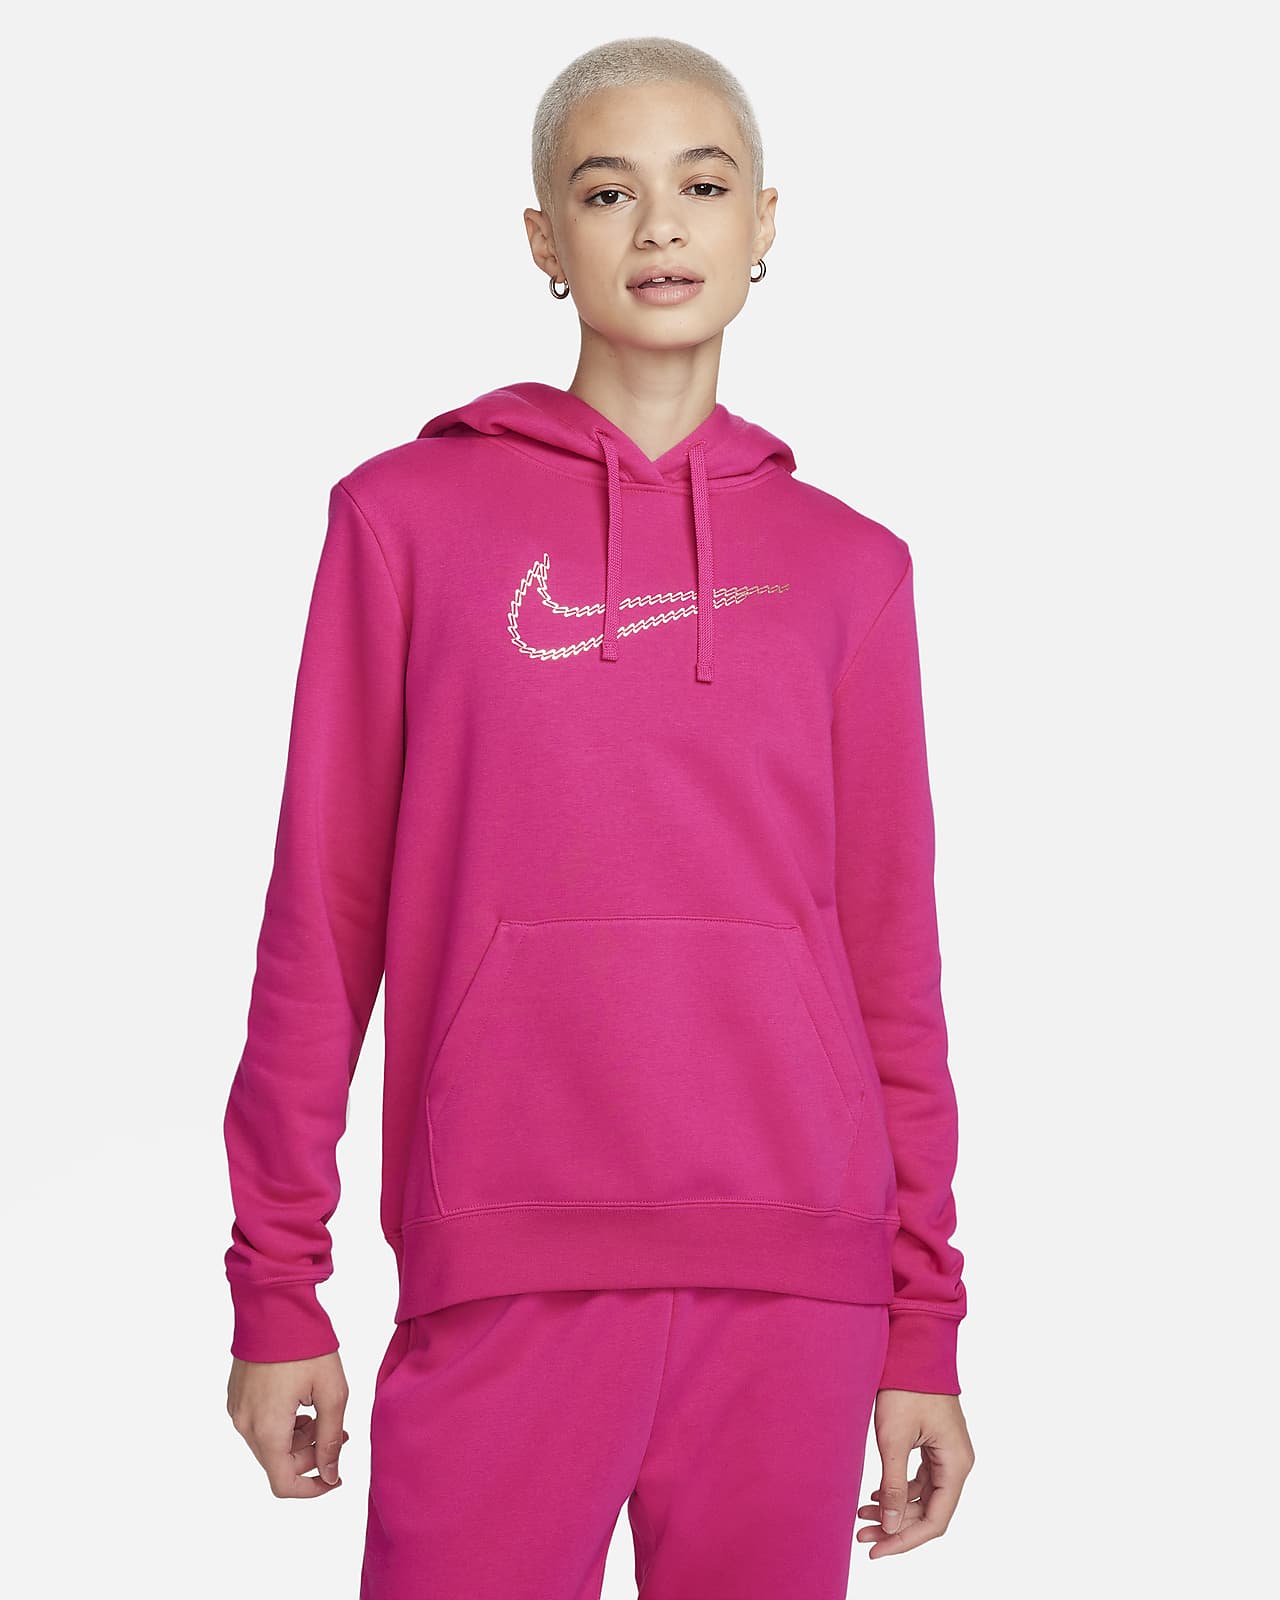 Sudadera Nike Cremallera Essential Mujer Rosa